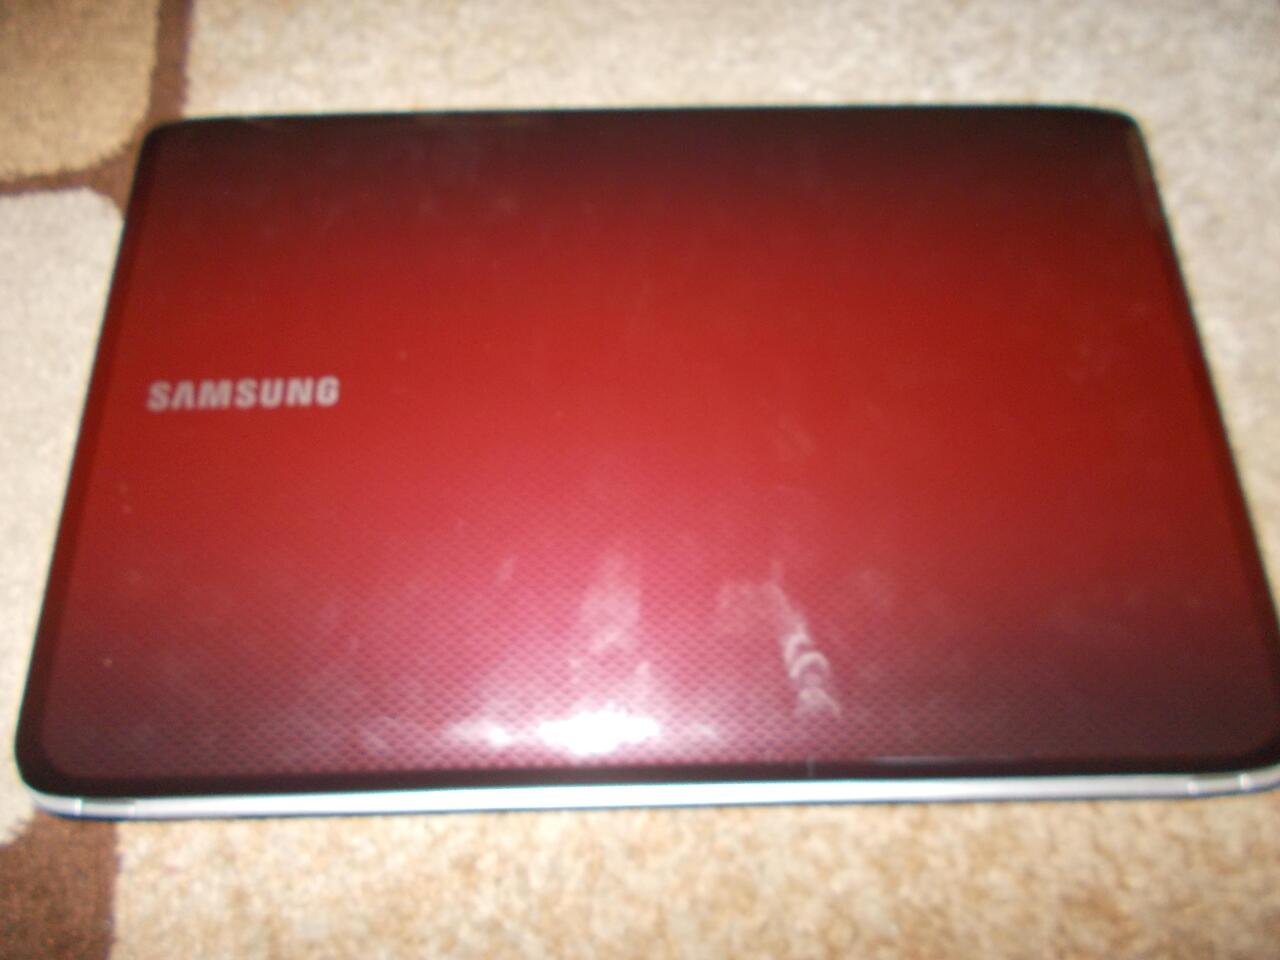 Samsung томск купить. Samsung r530. Samsung NP-r530. Ноутбук самсунг красный r530. Ноутбук самсунг бордовый r-530.